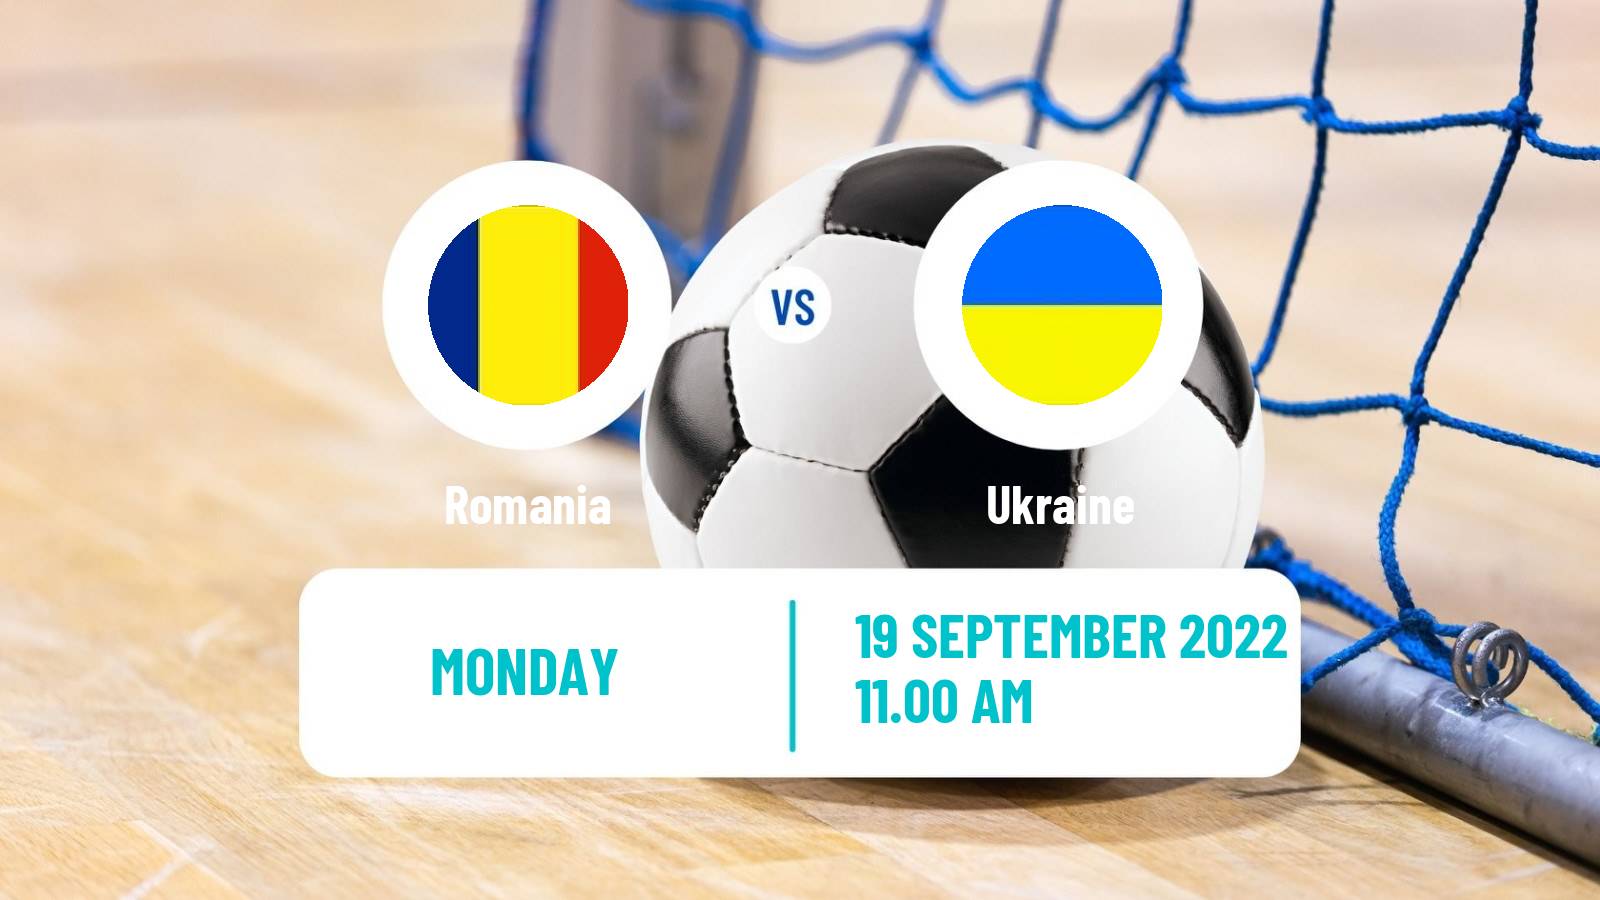 Futsal Friendly International Futsal Romania - Ukraine